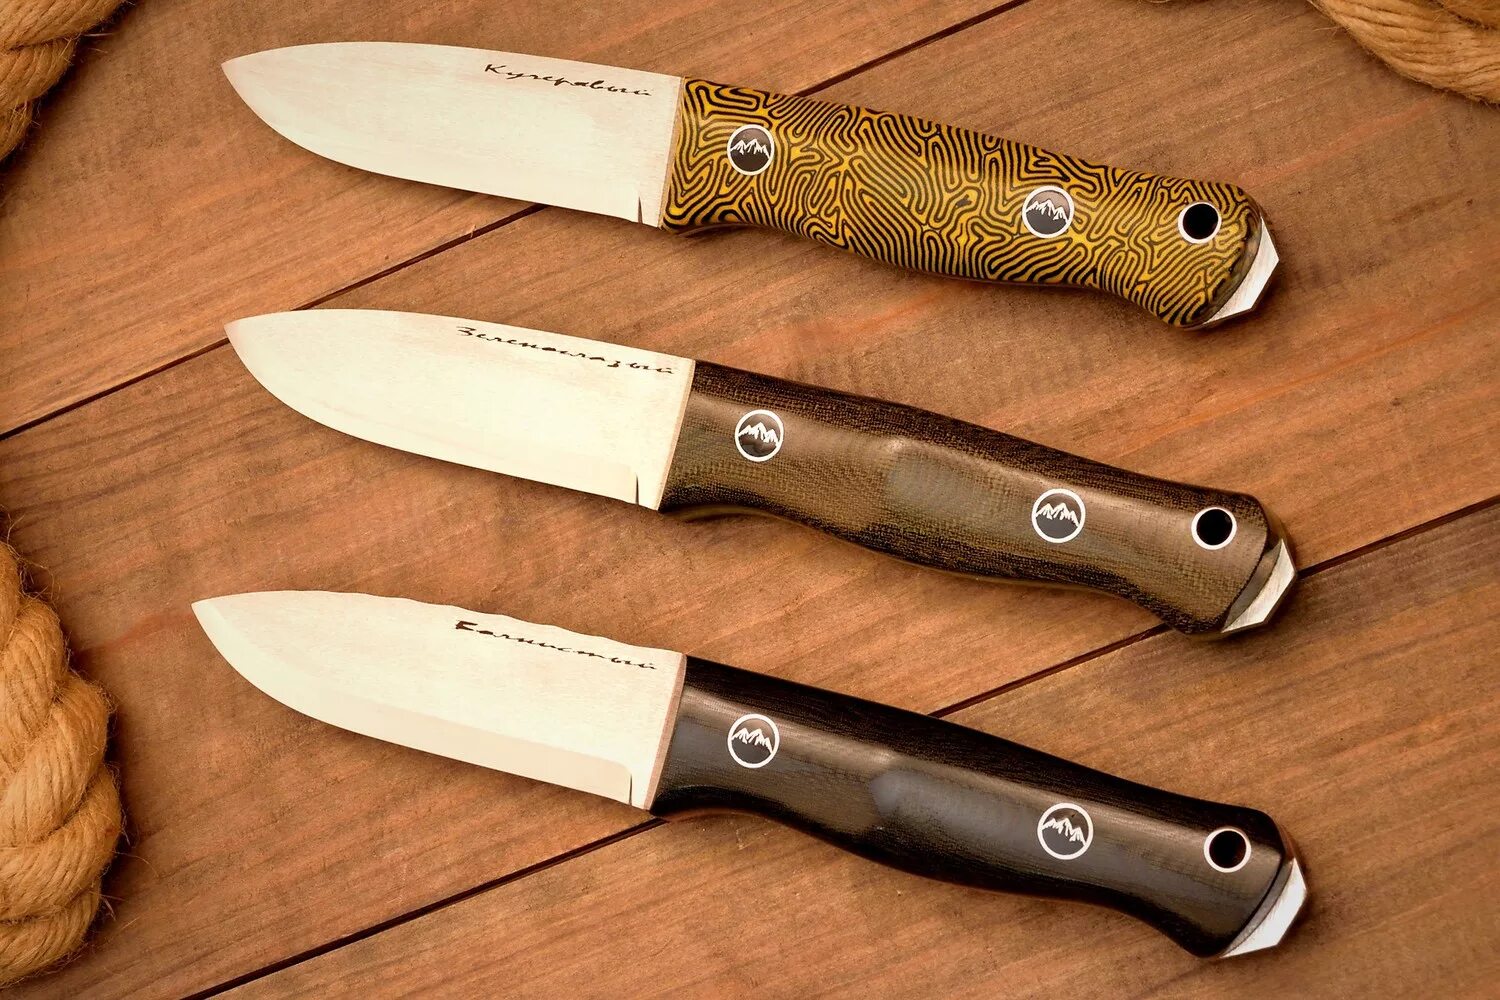 BEAVERKNIFE - Bushcraft America нож. Ножи Бивер НАЙФ. Нож Канада Бивер кнайф. Beaver Knife бушкрафт Америка. Нож бушкрафт купить